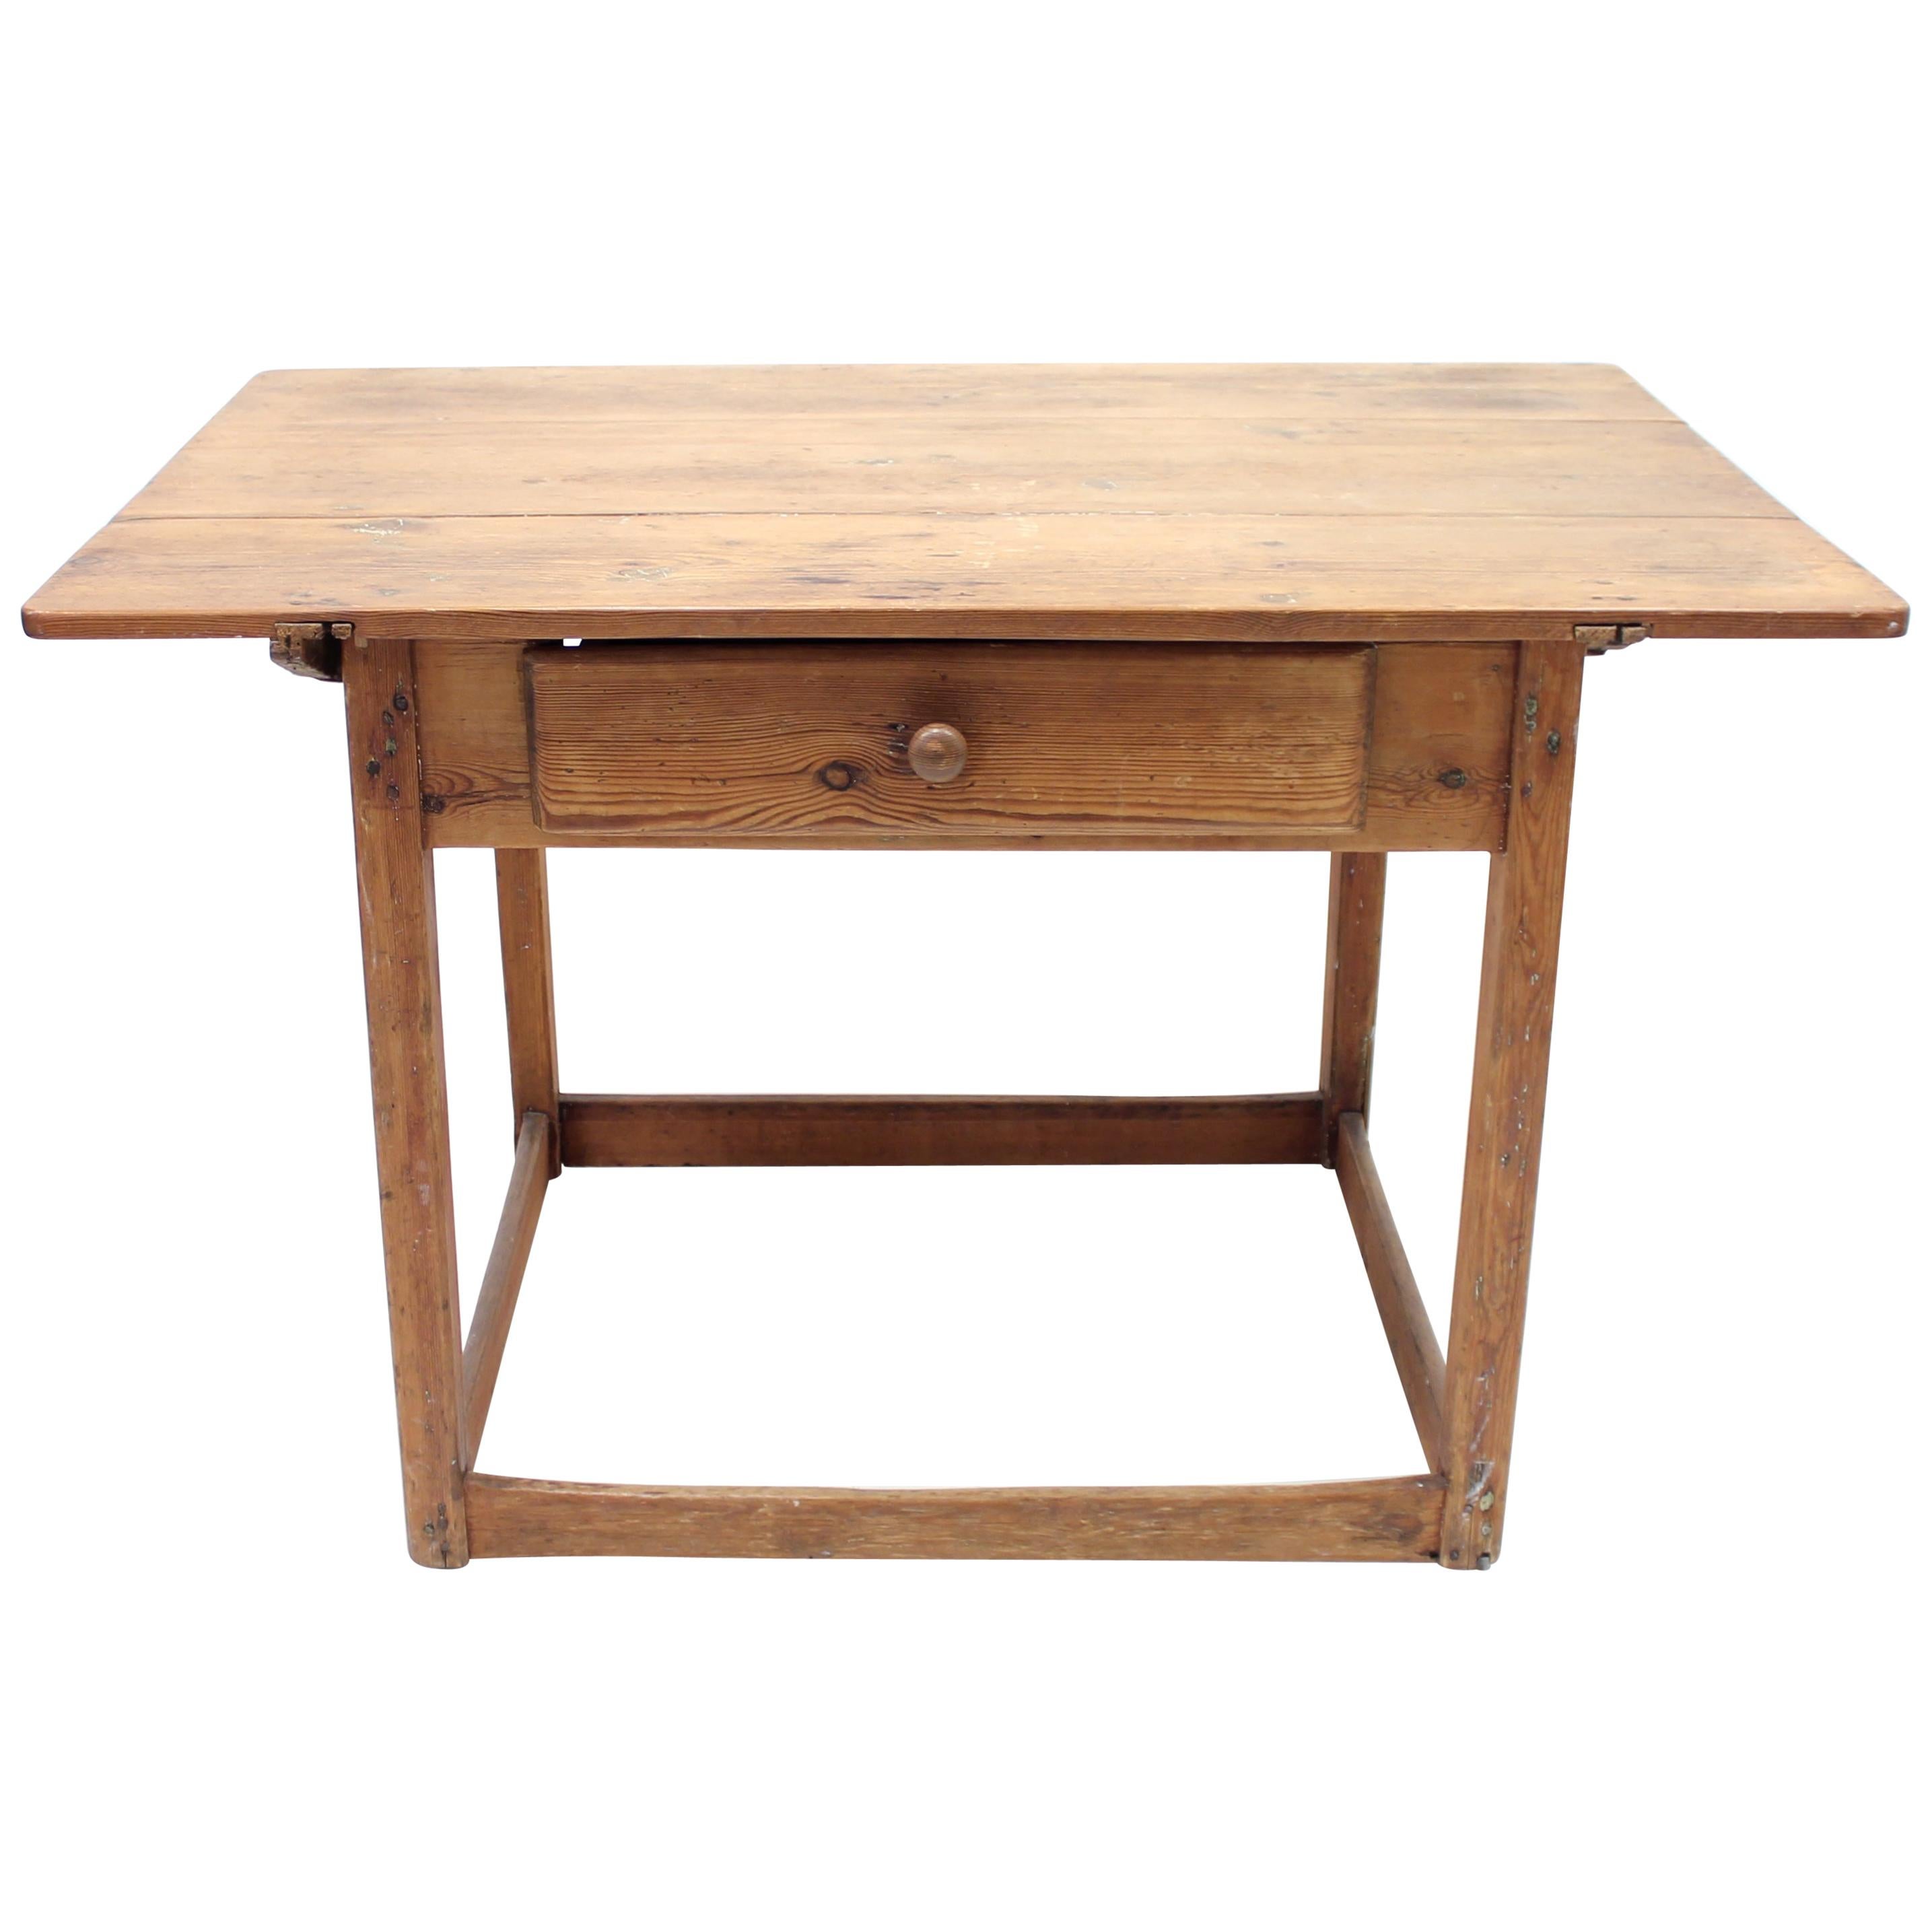 Rustic Mid-19th Century Antique Swedish Pine Table